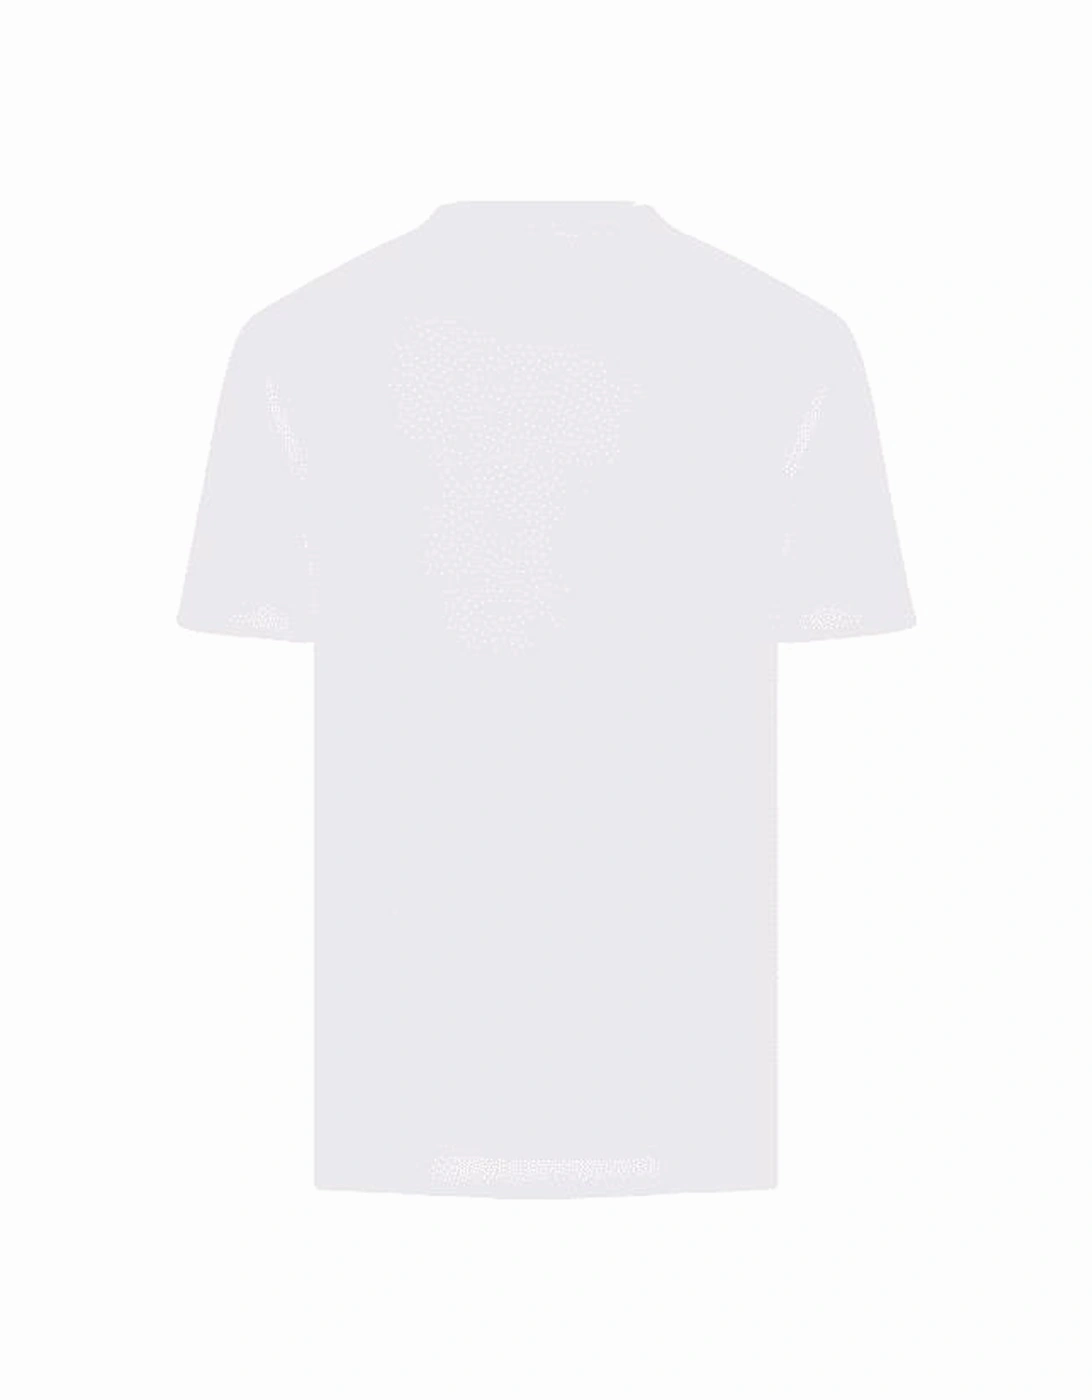 Cotton Lux Raised Logo White T-Shirt